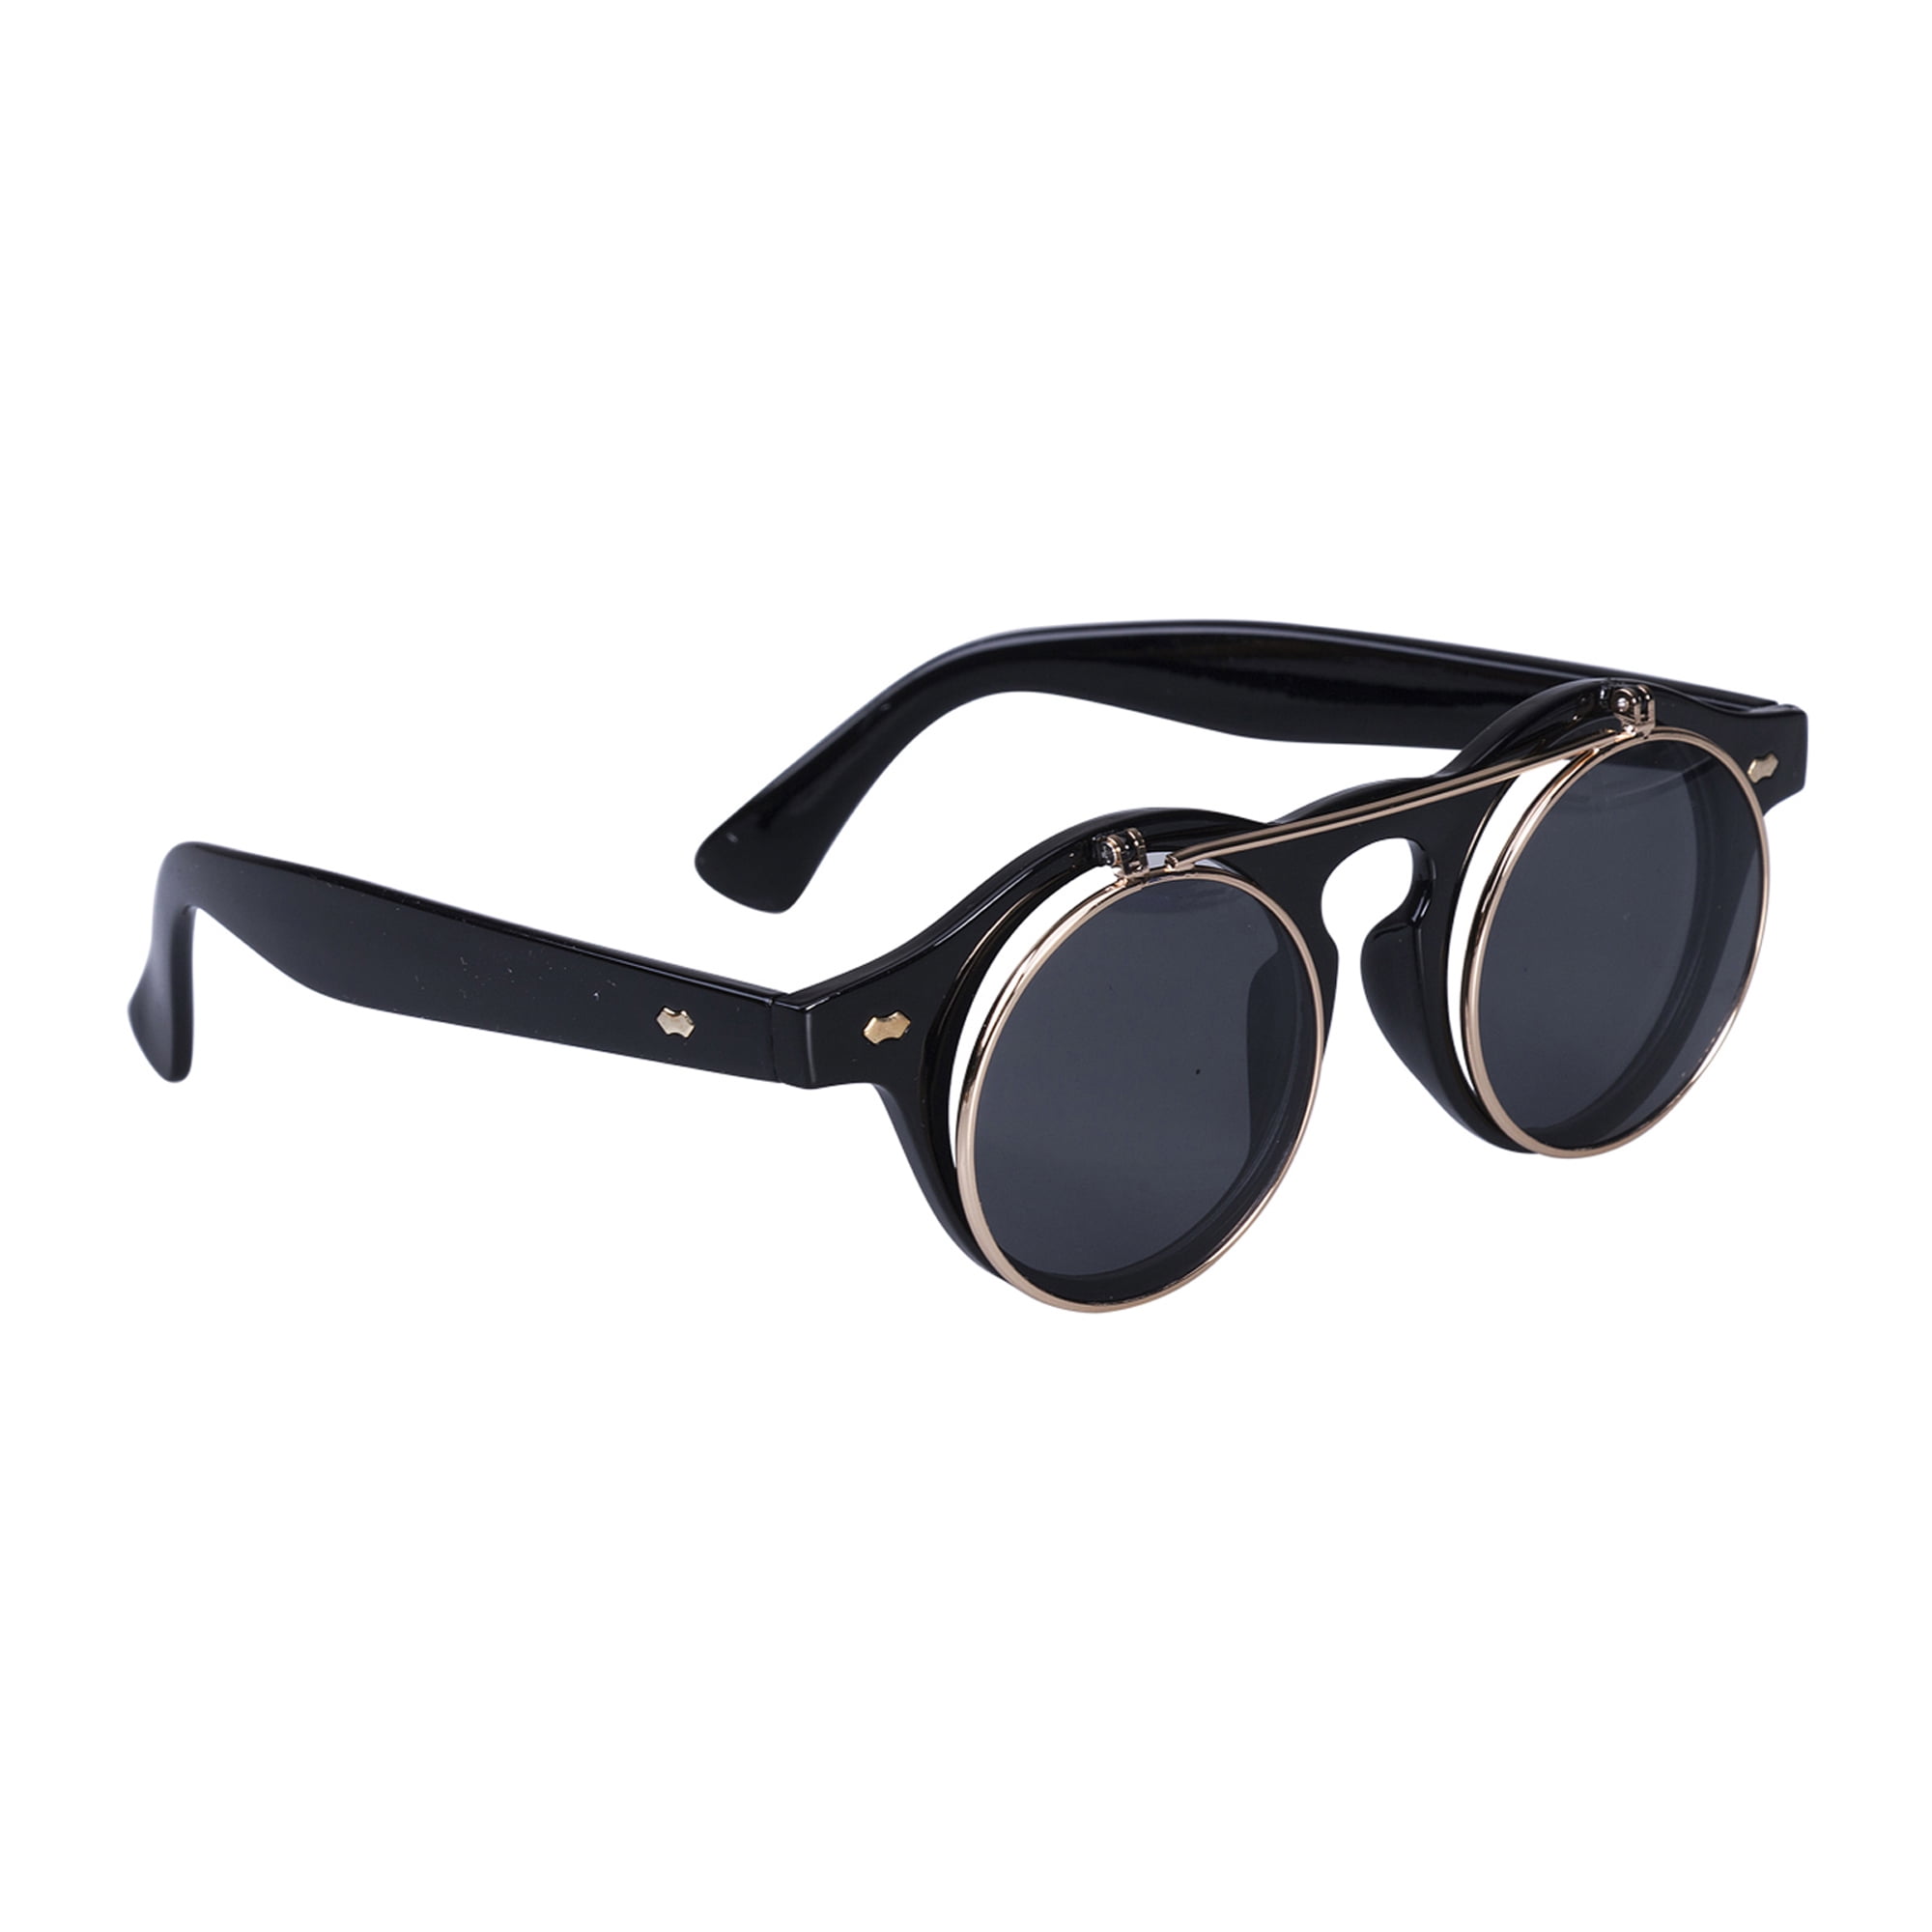 Fashion Vintage Steampunk Sunglasses Men Women Leather Side Shield